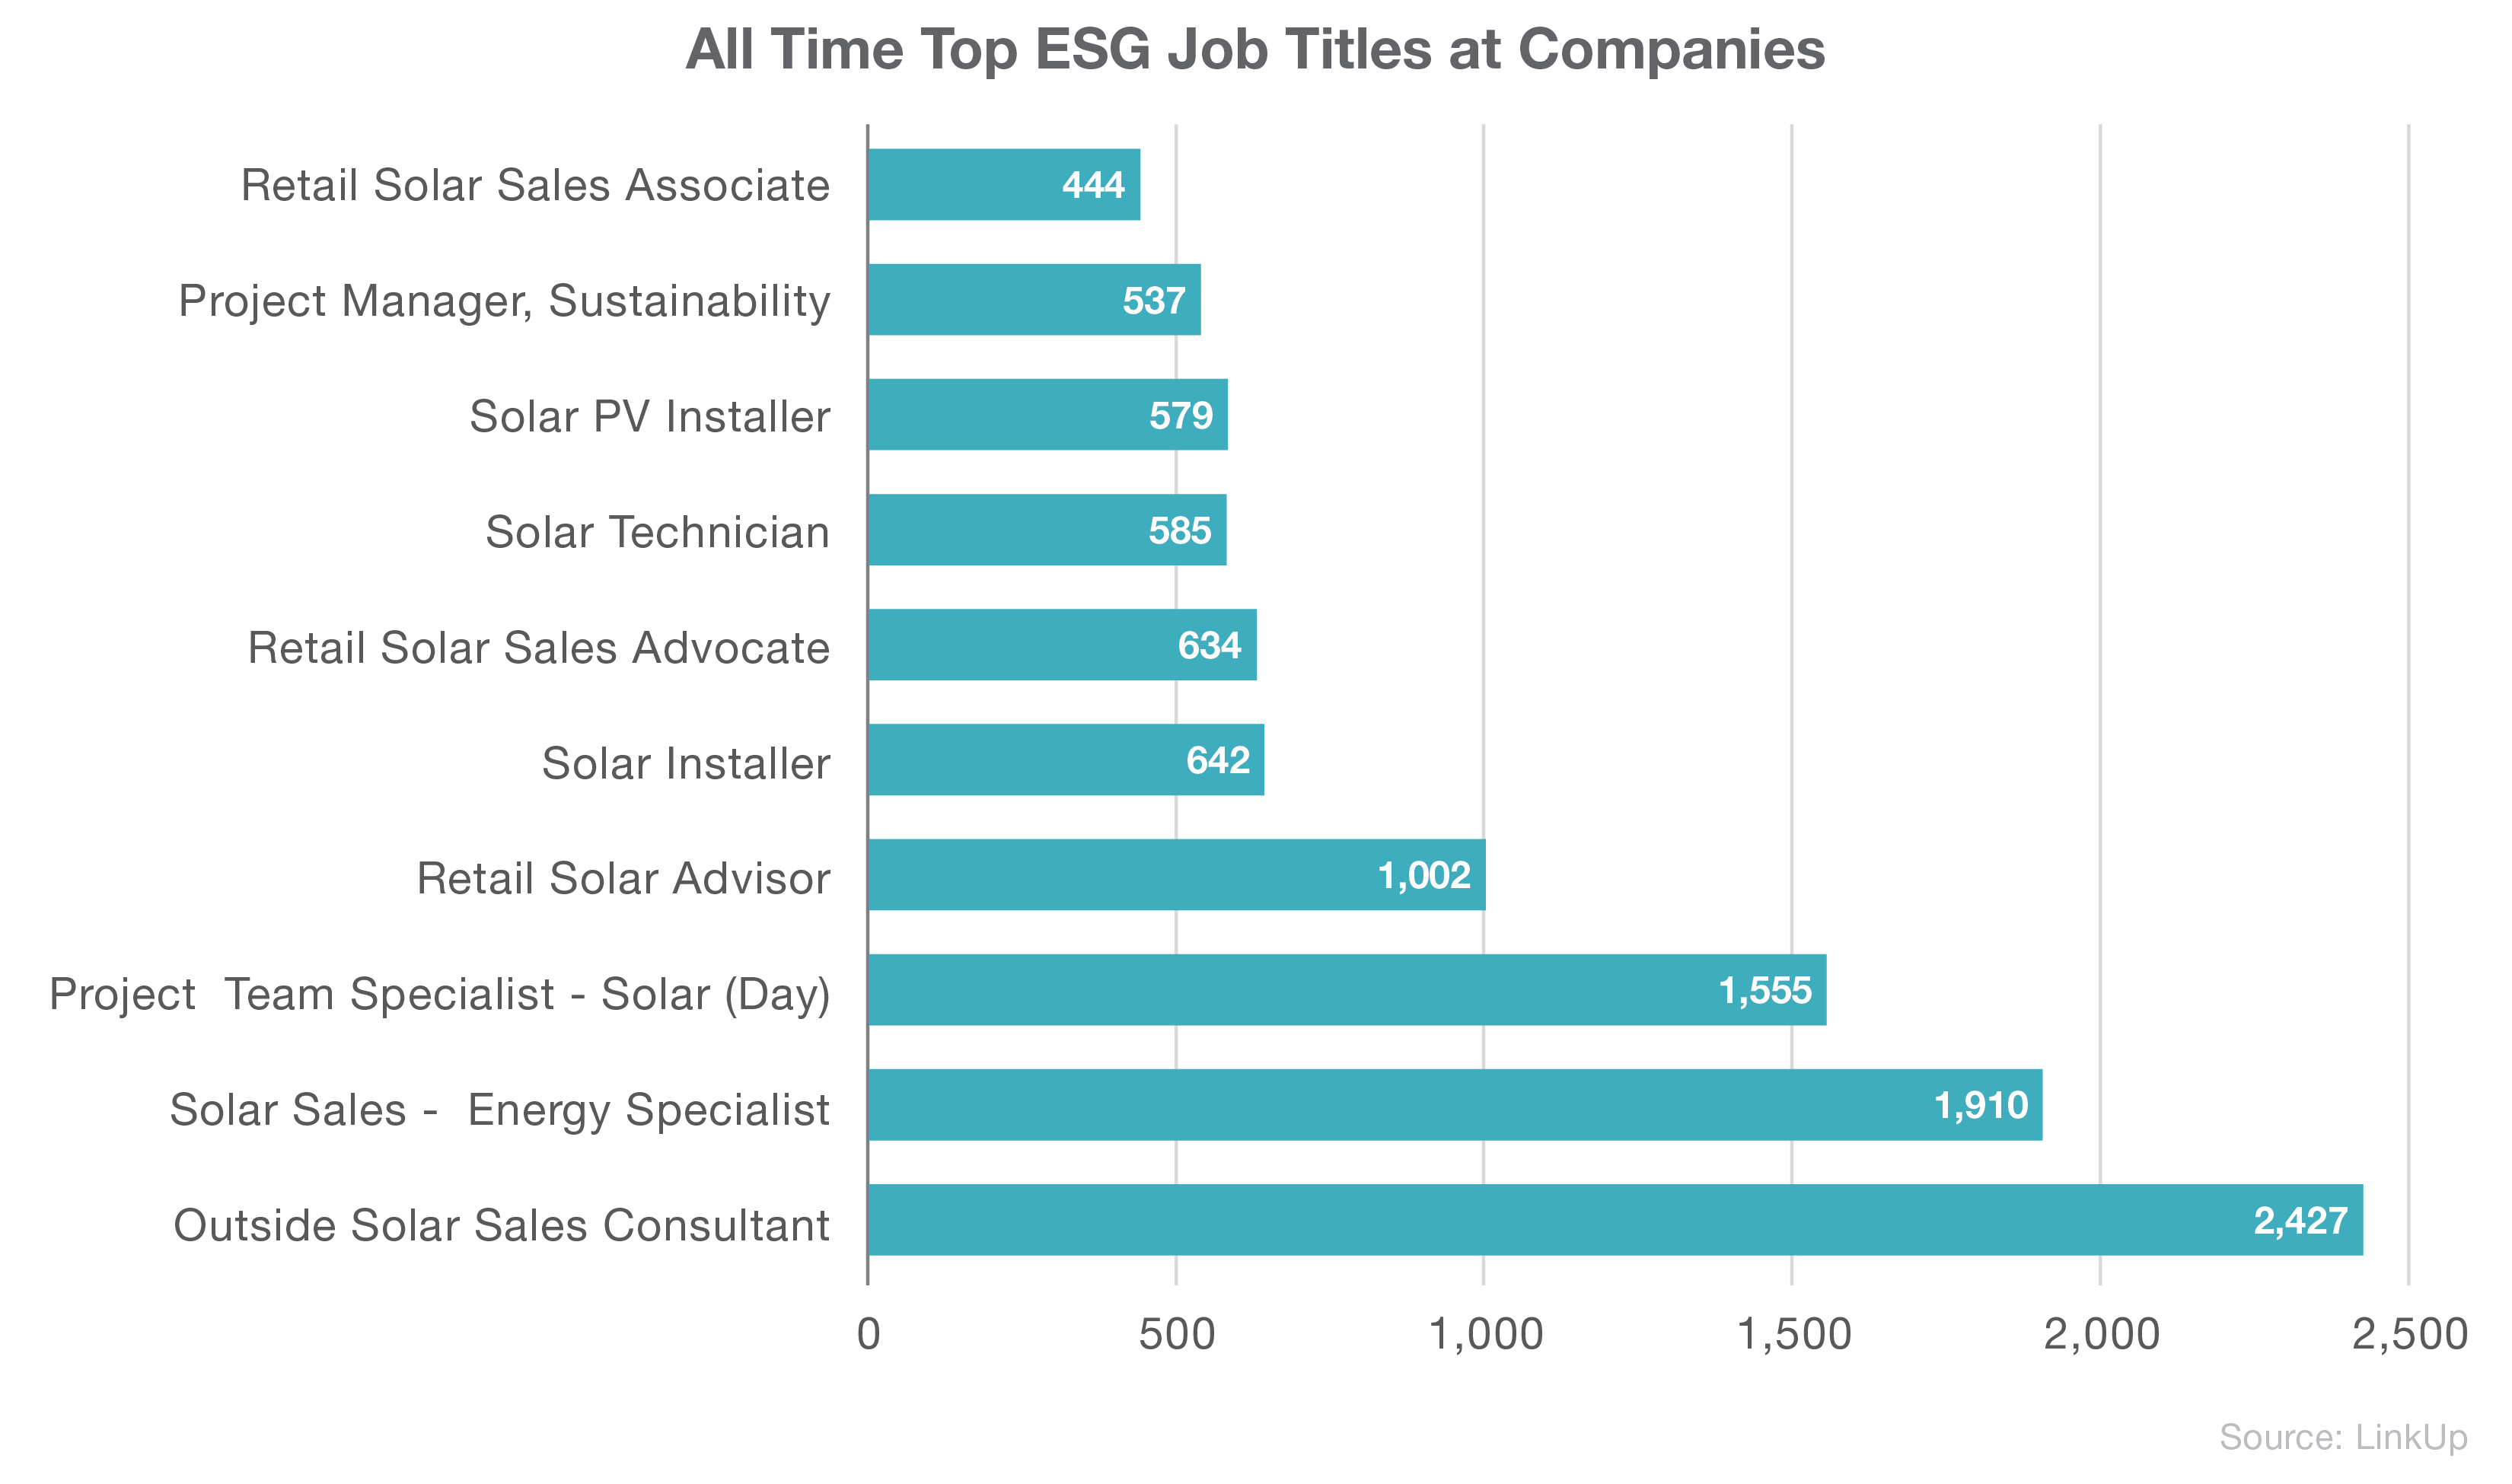 Top ESG Job Titles by Company